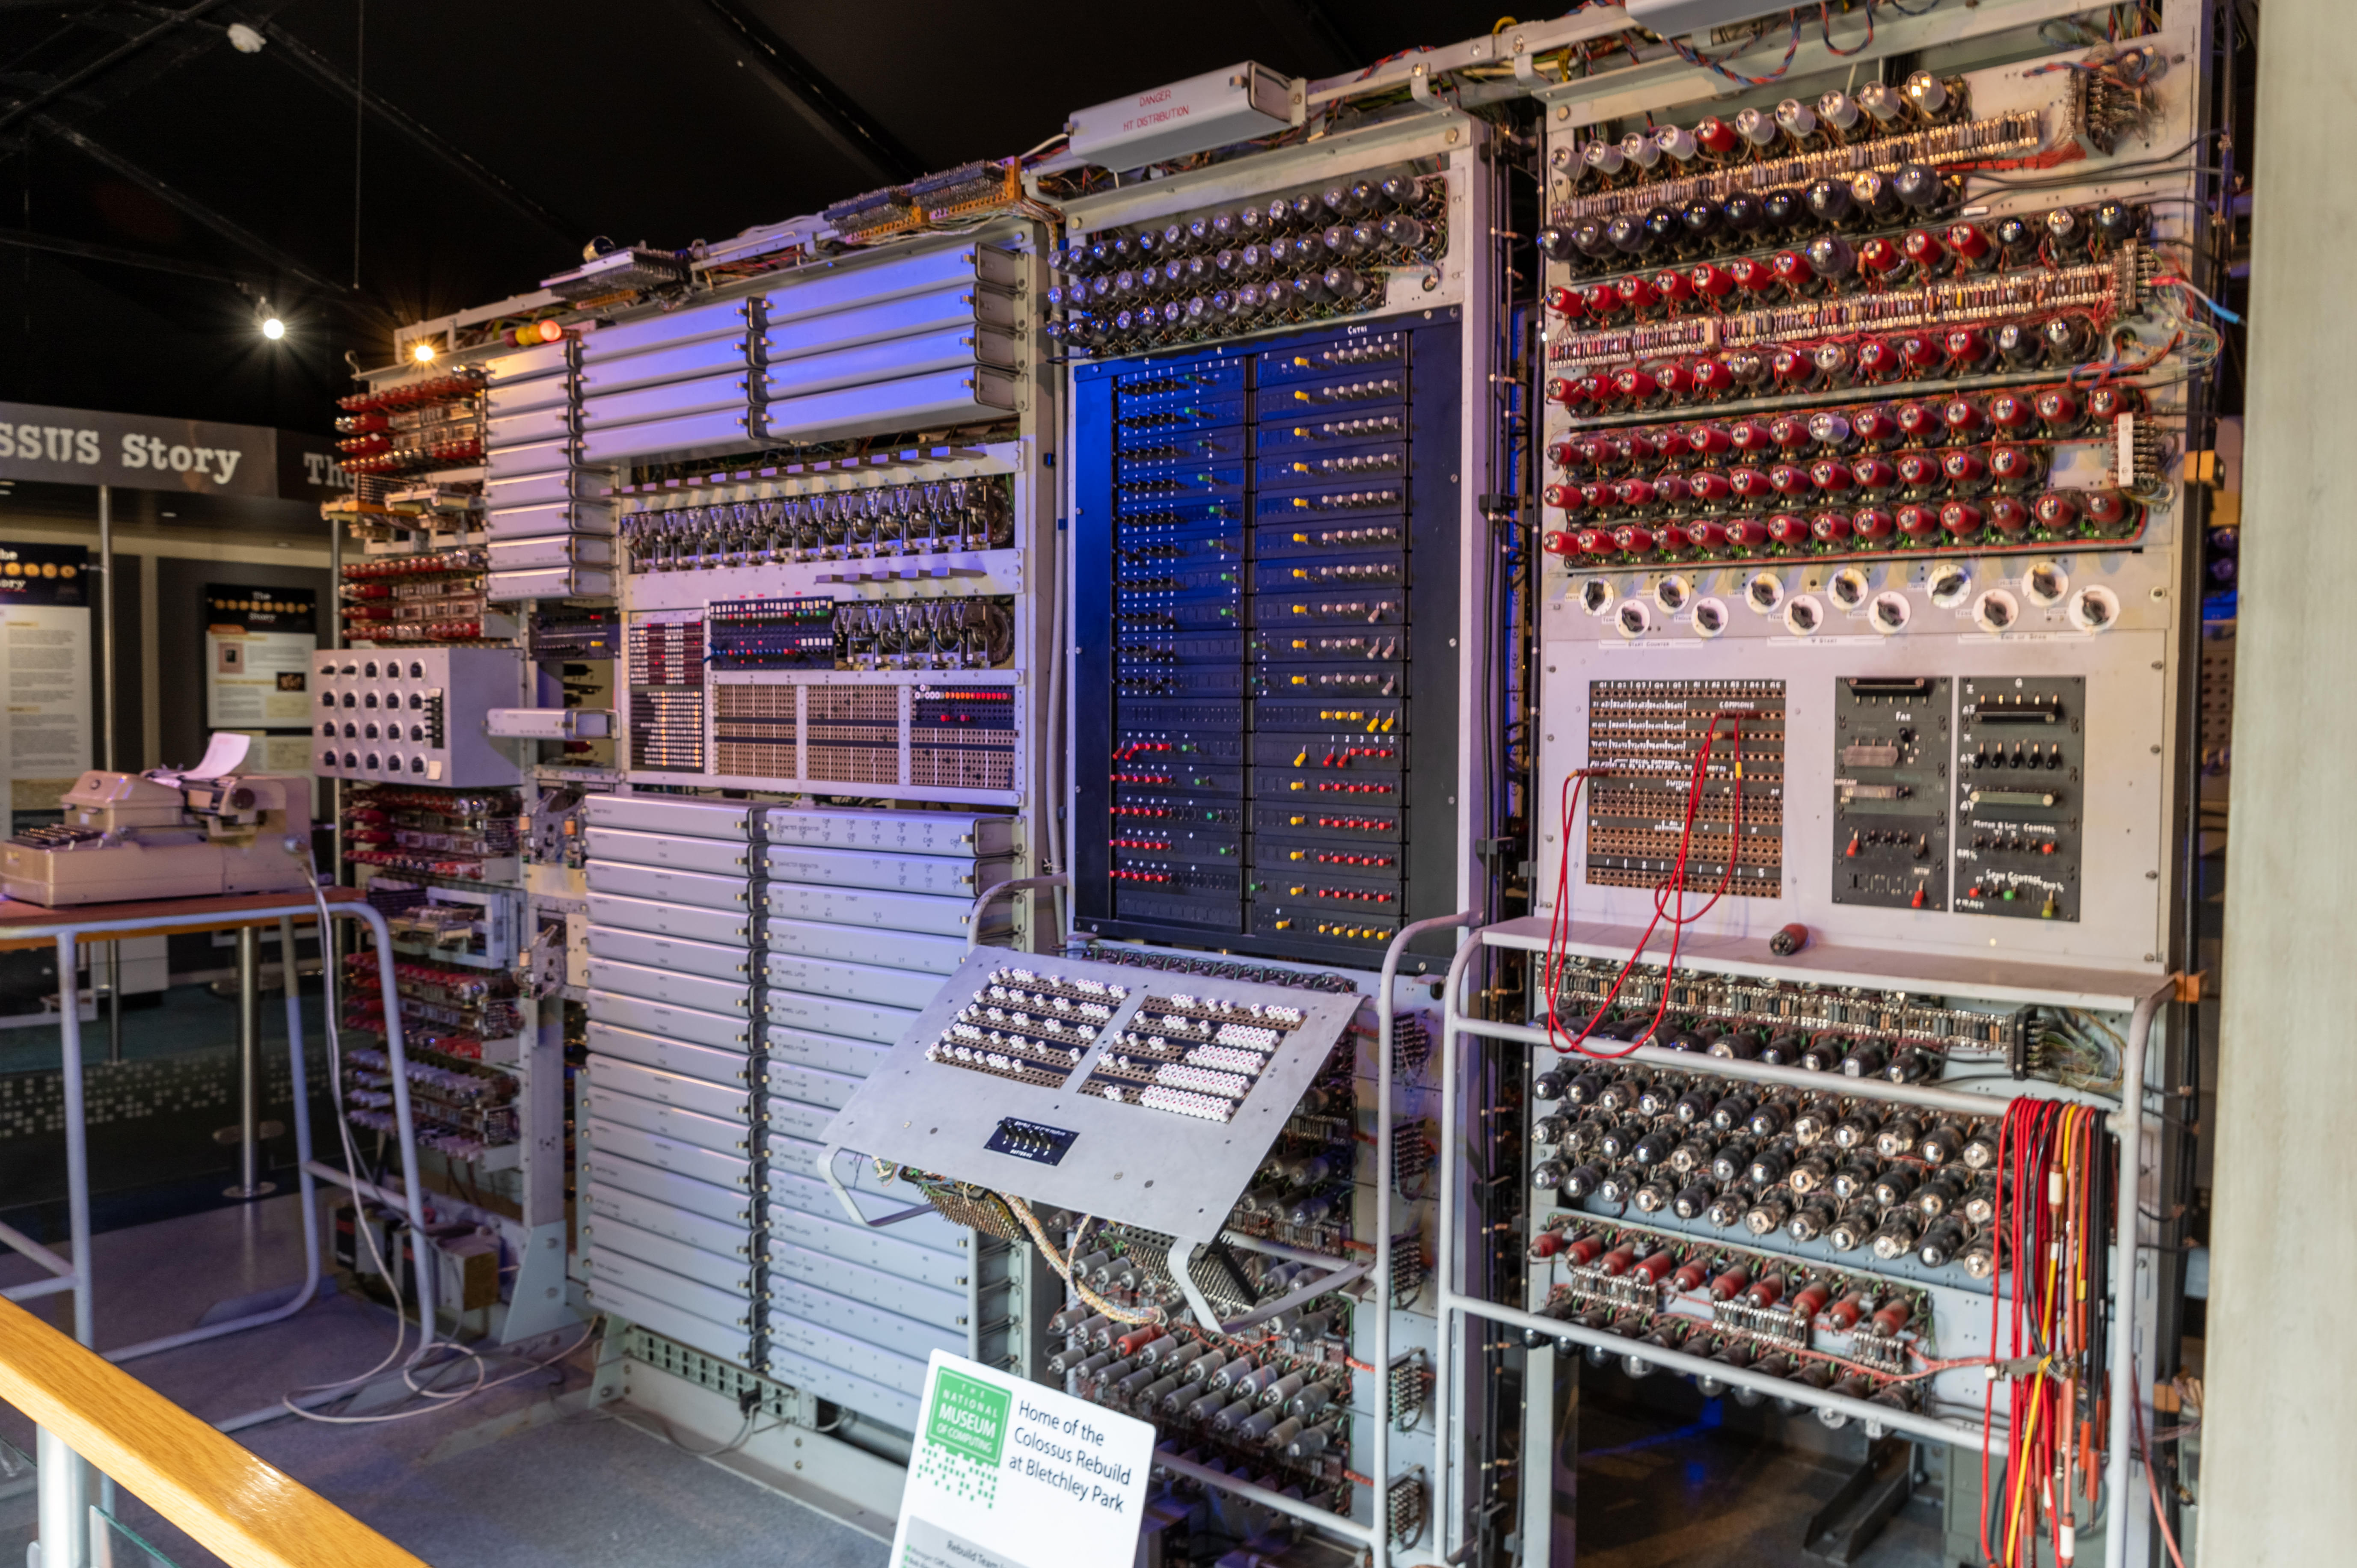 National Museum of Computing